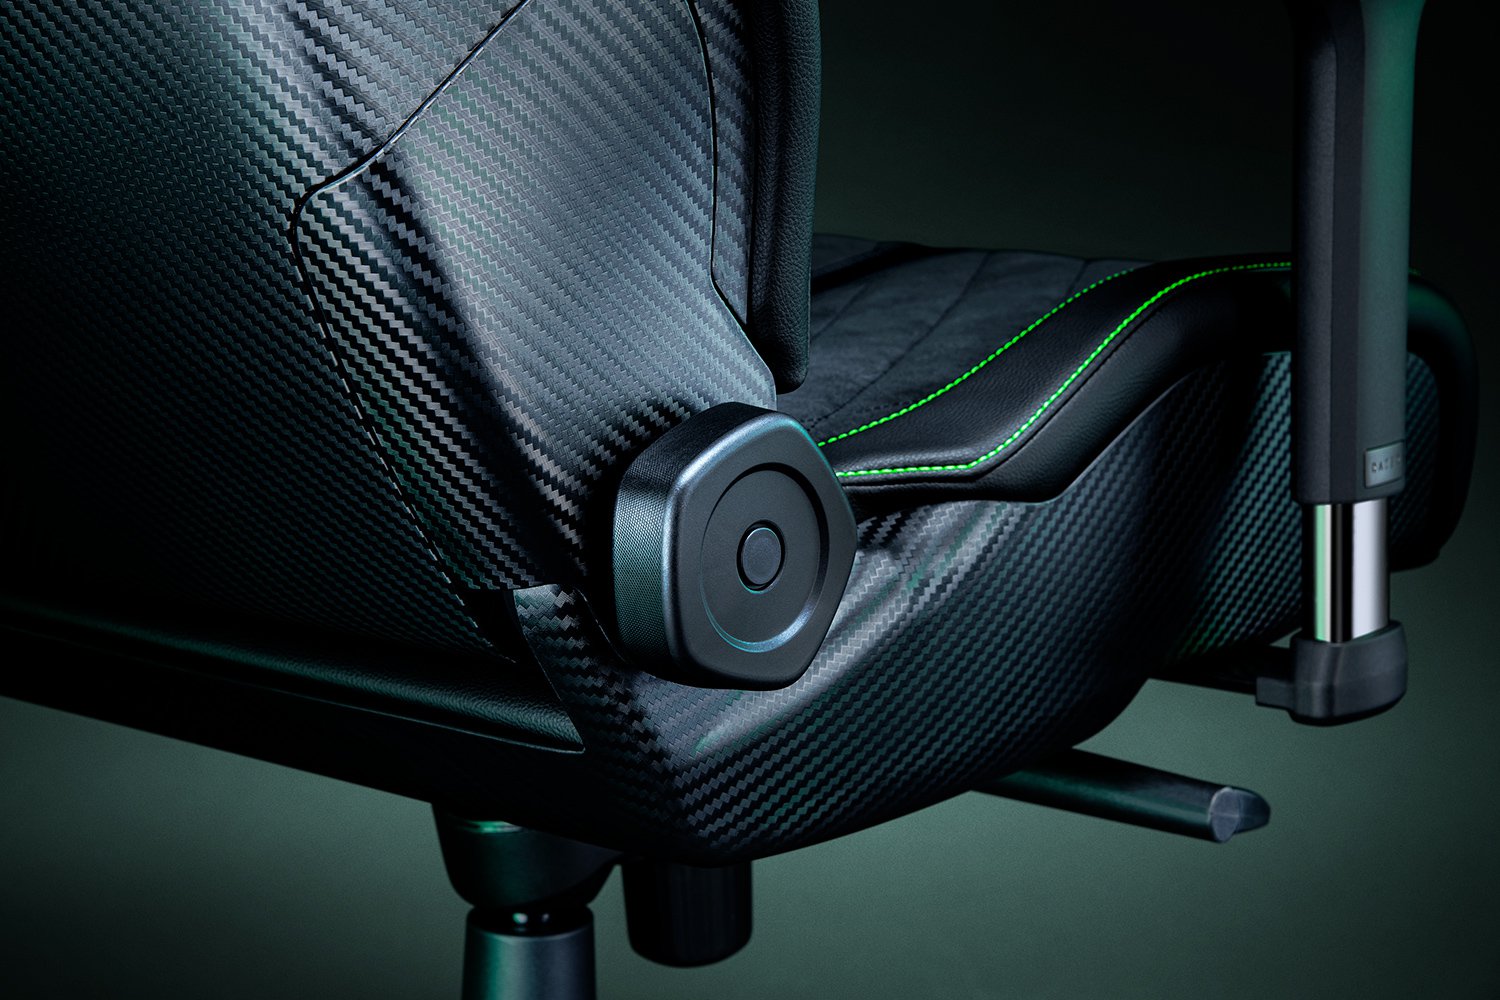 Razer Enki - black/green Chaise de gaming – acheter chez